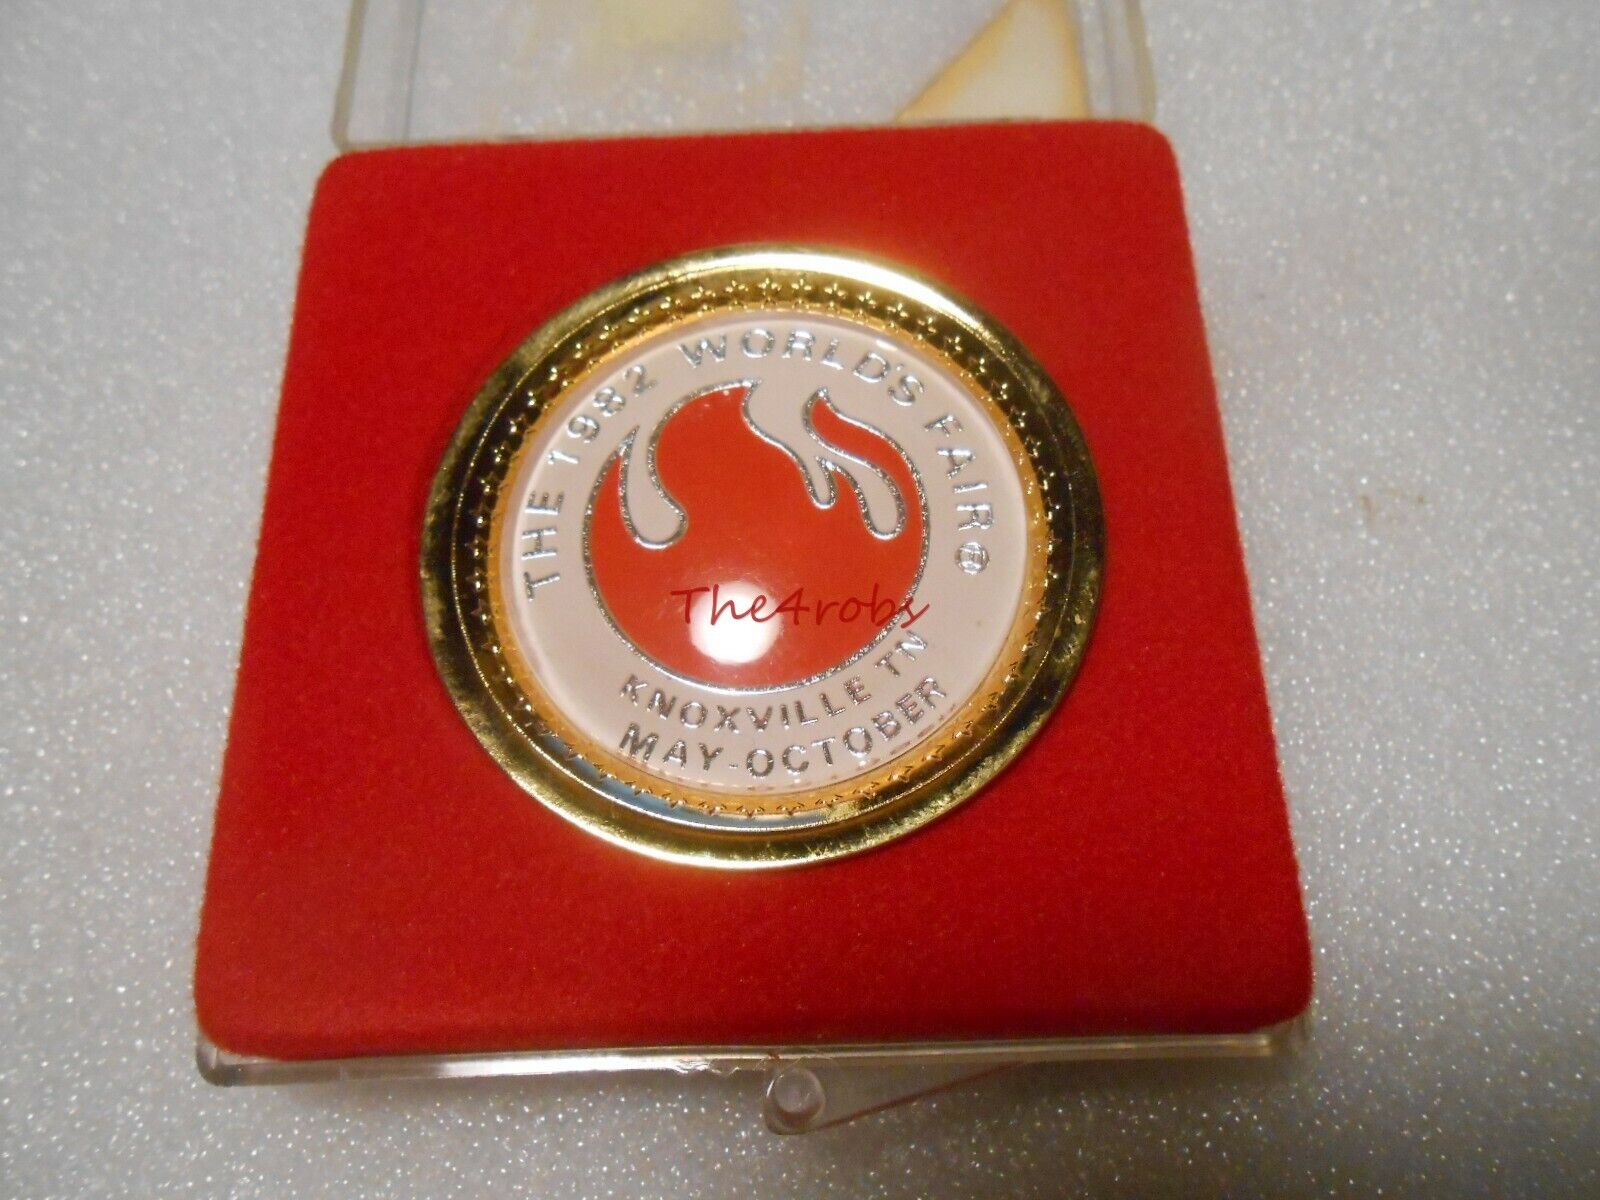 1982 Worlds Fair Knoxville Miniature Metal Plate in Original Box